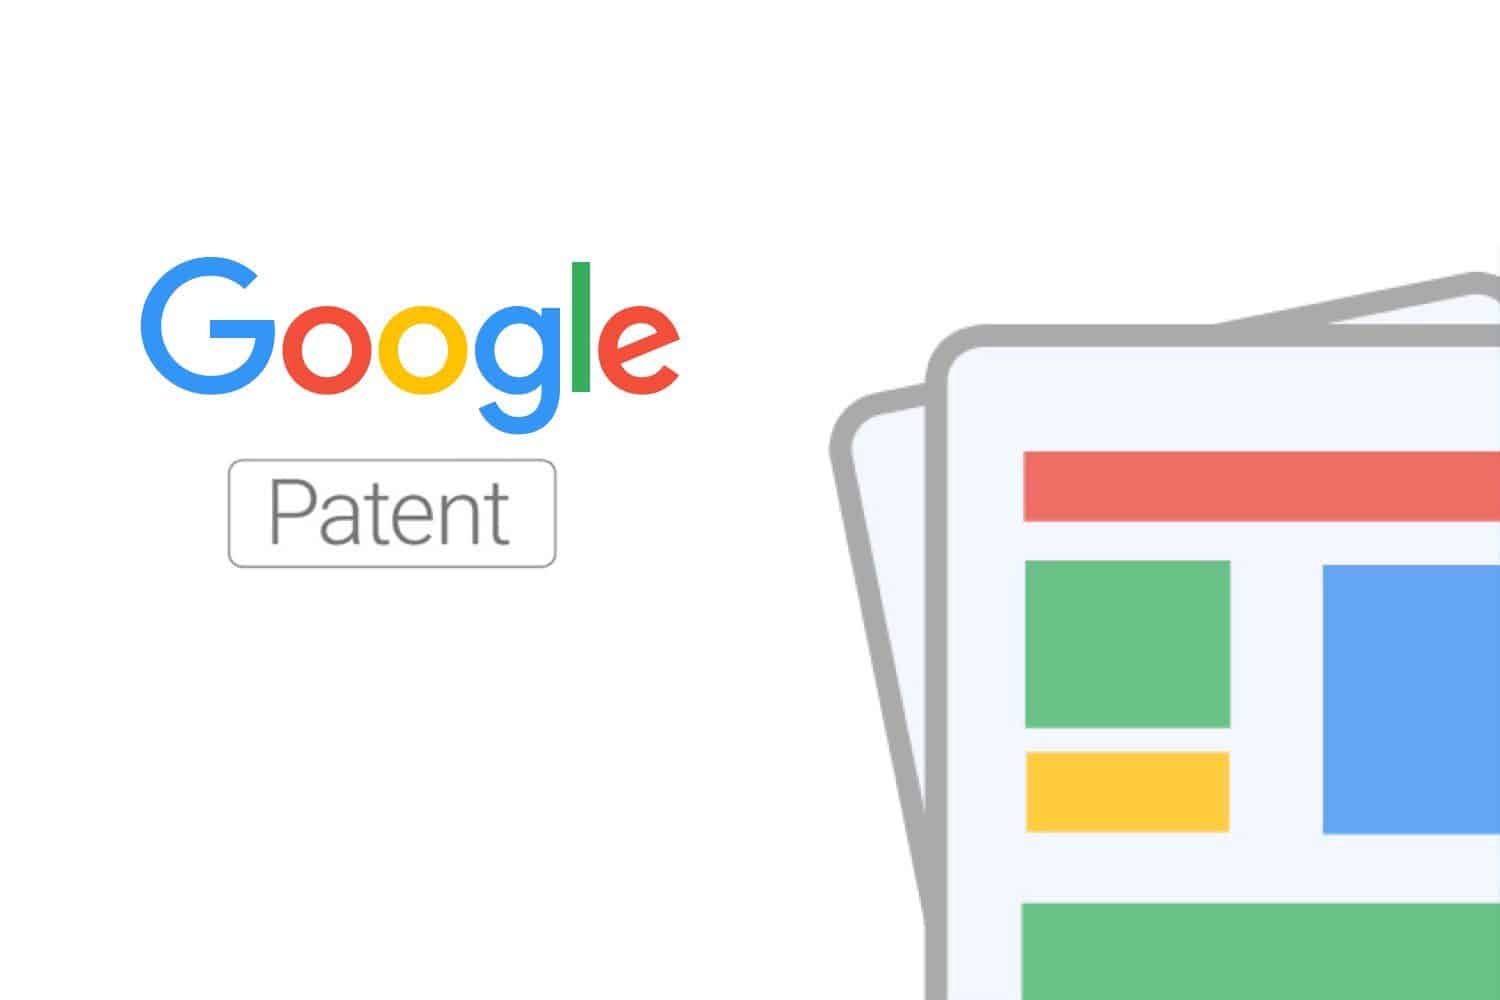 Google patents Google patents